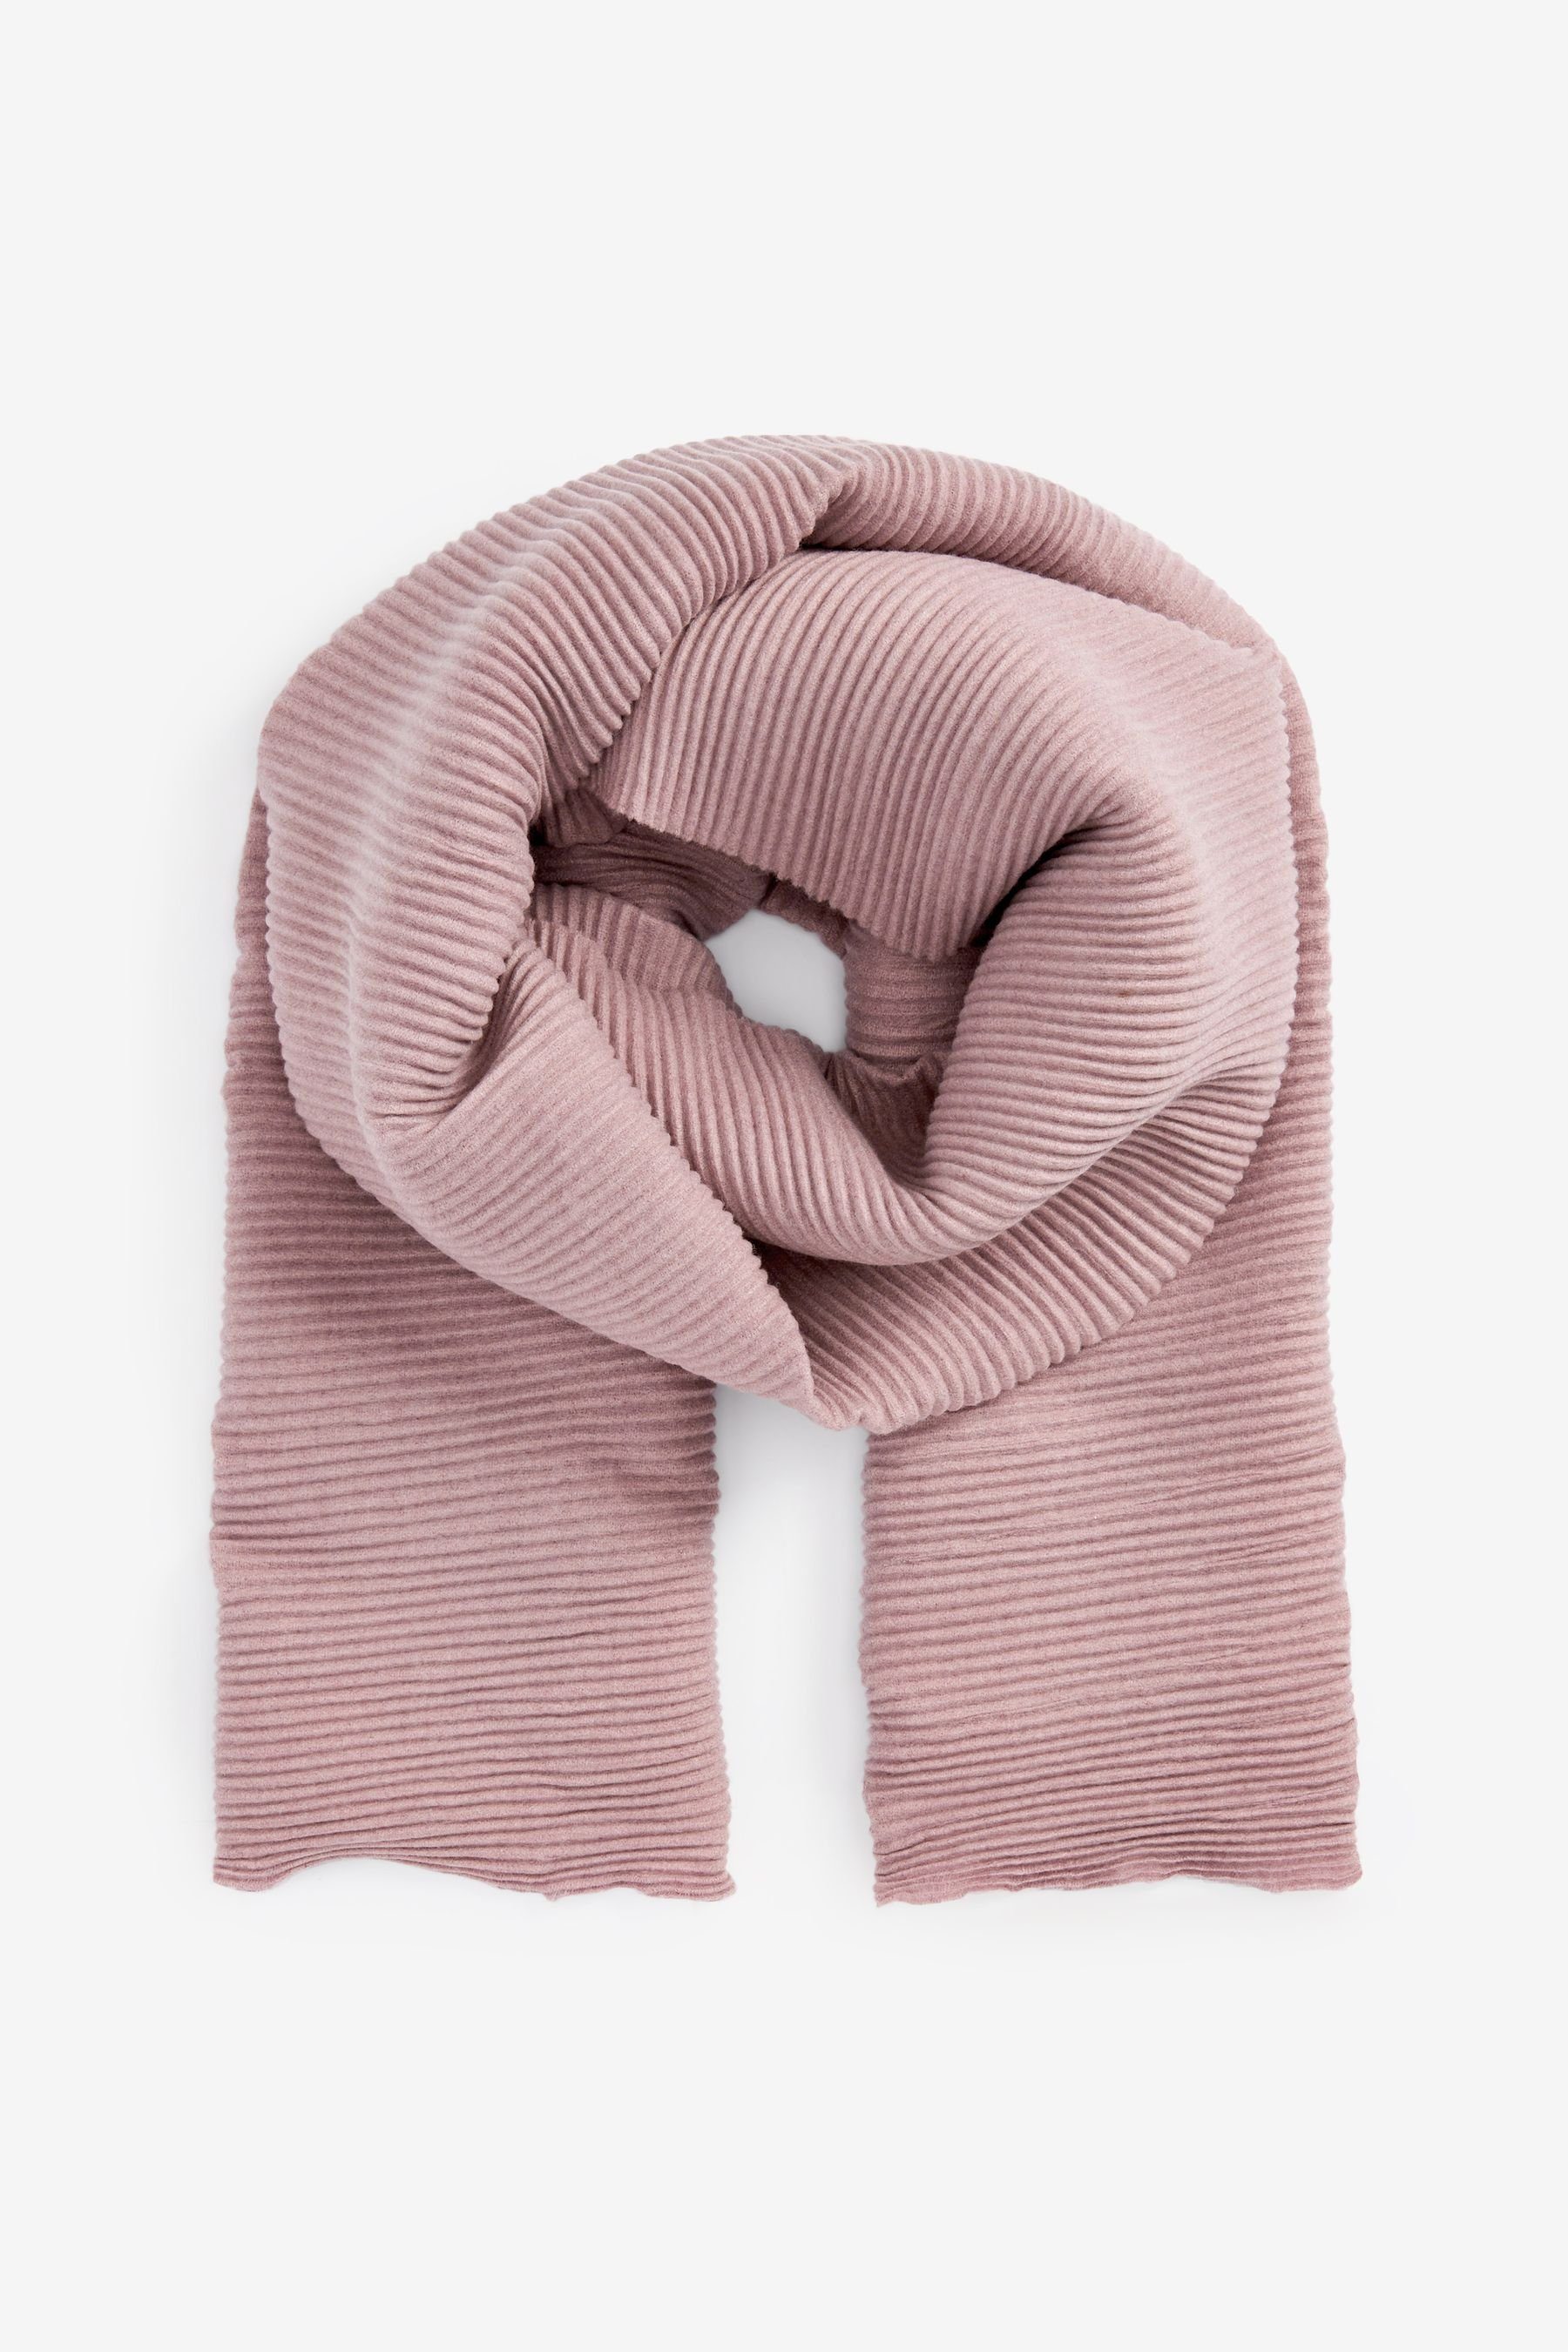 Next Schal Mittelschwerer, plissierter Schal, (1-St) Pink | Modeschals